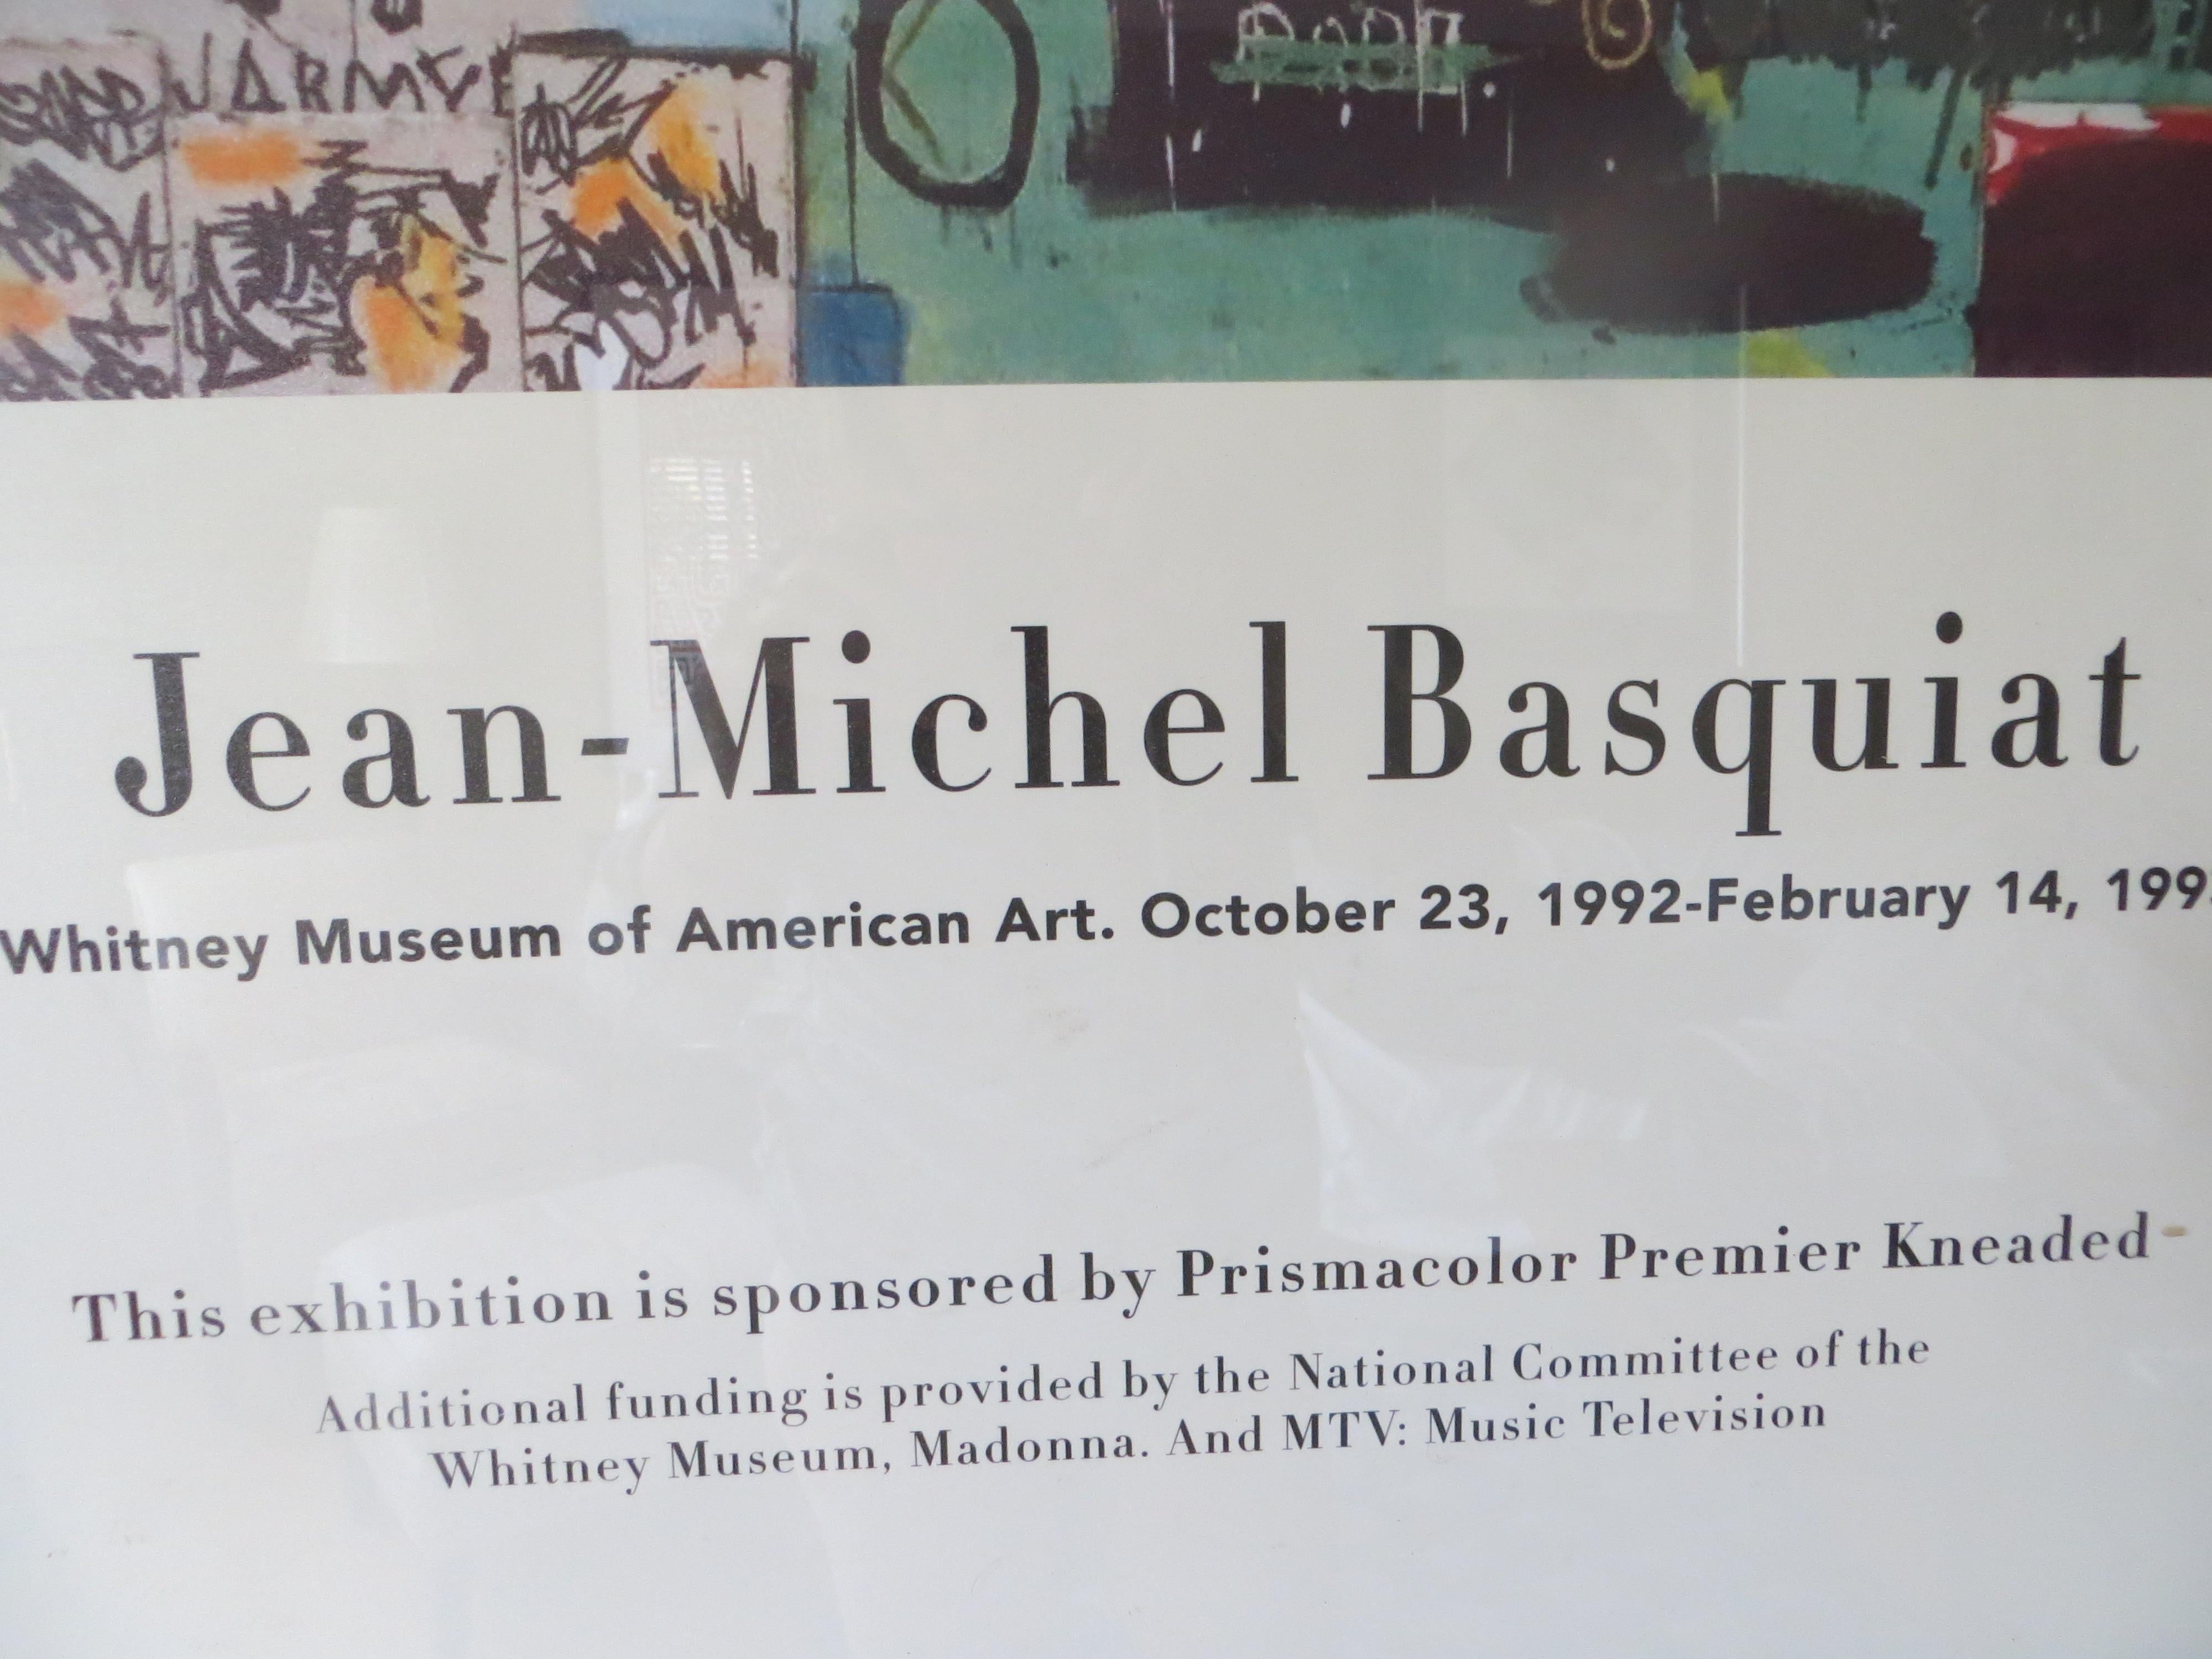  Jean-Michel Basquiat  Exhibition Poster - Street Art Print by after Jean-Michel Basquiat